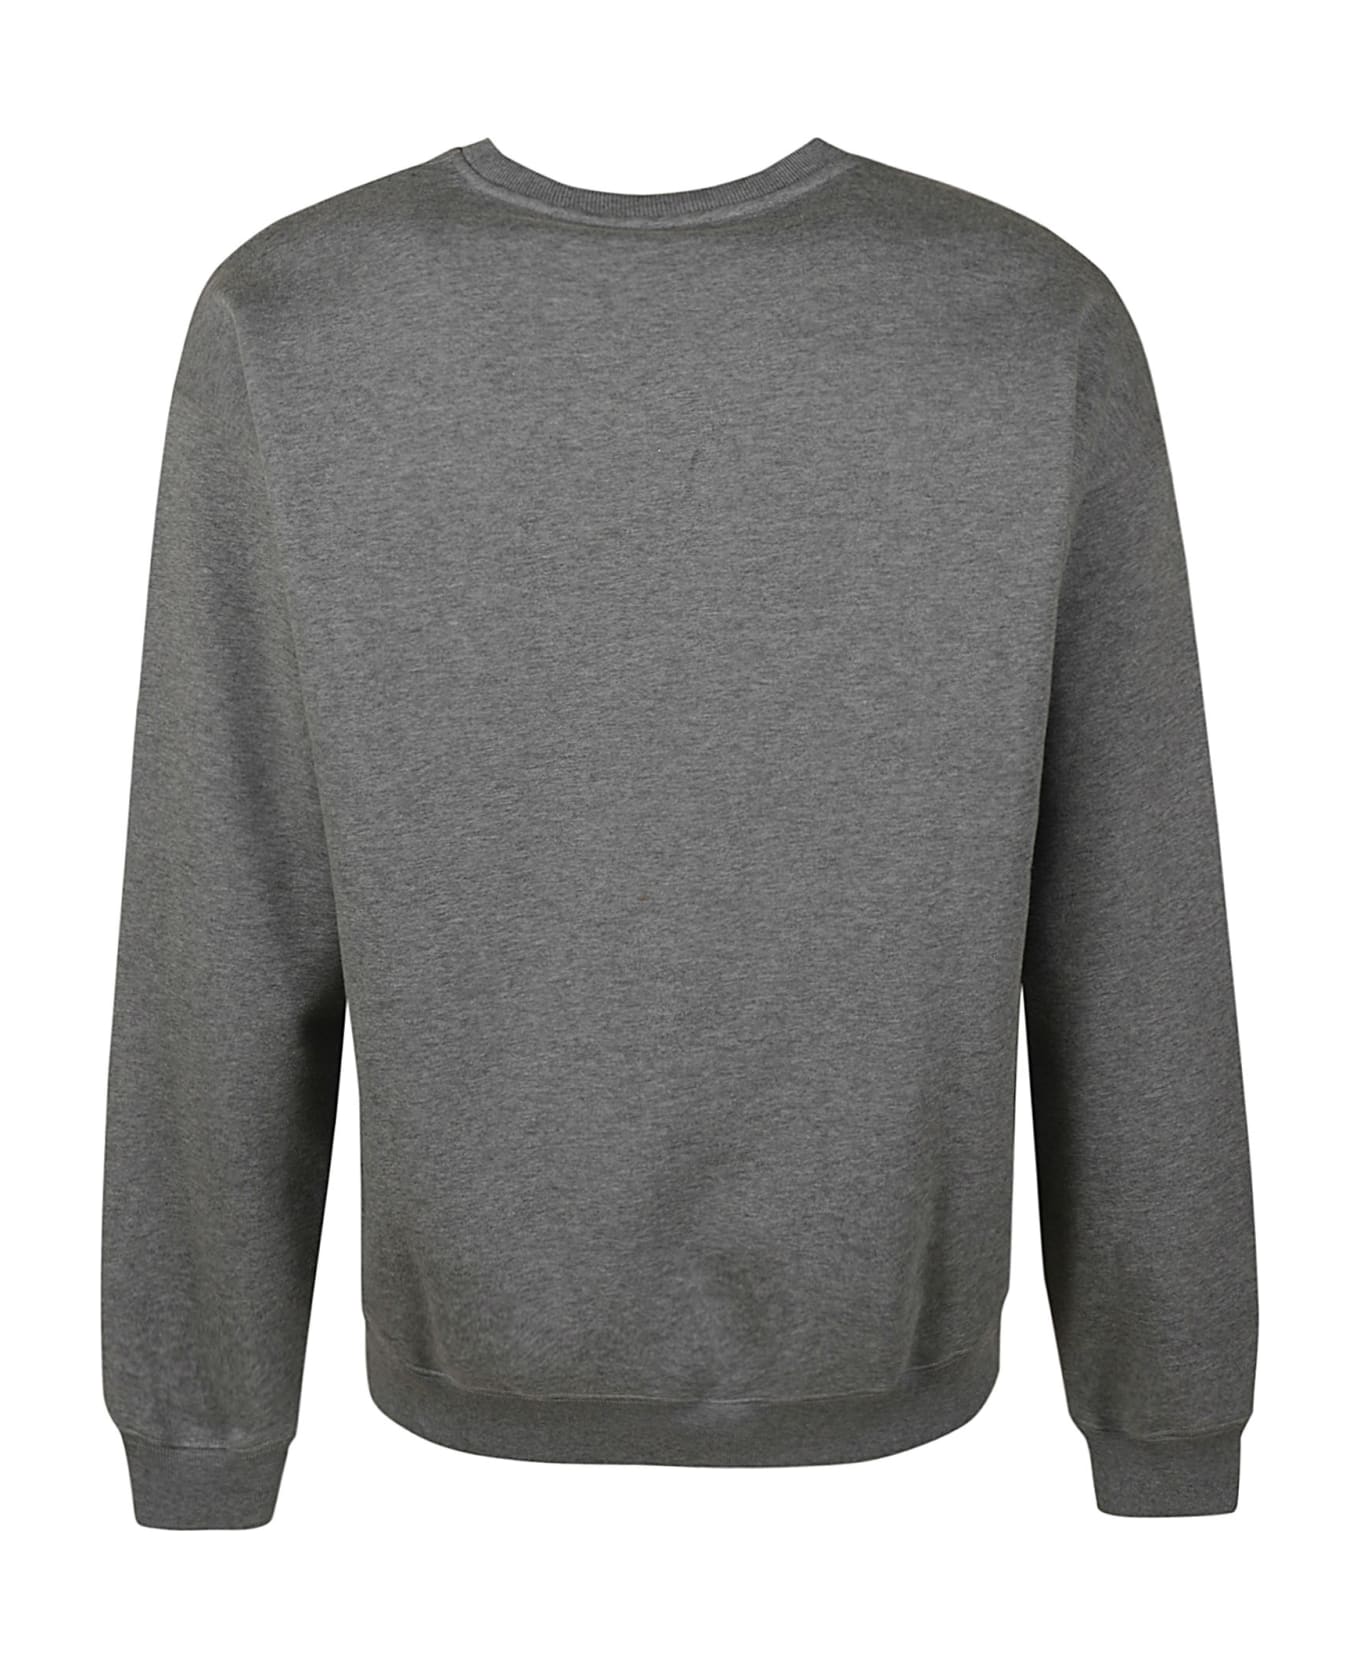 Versace Logo Patched Sweatshirt - Grey